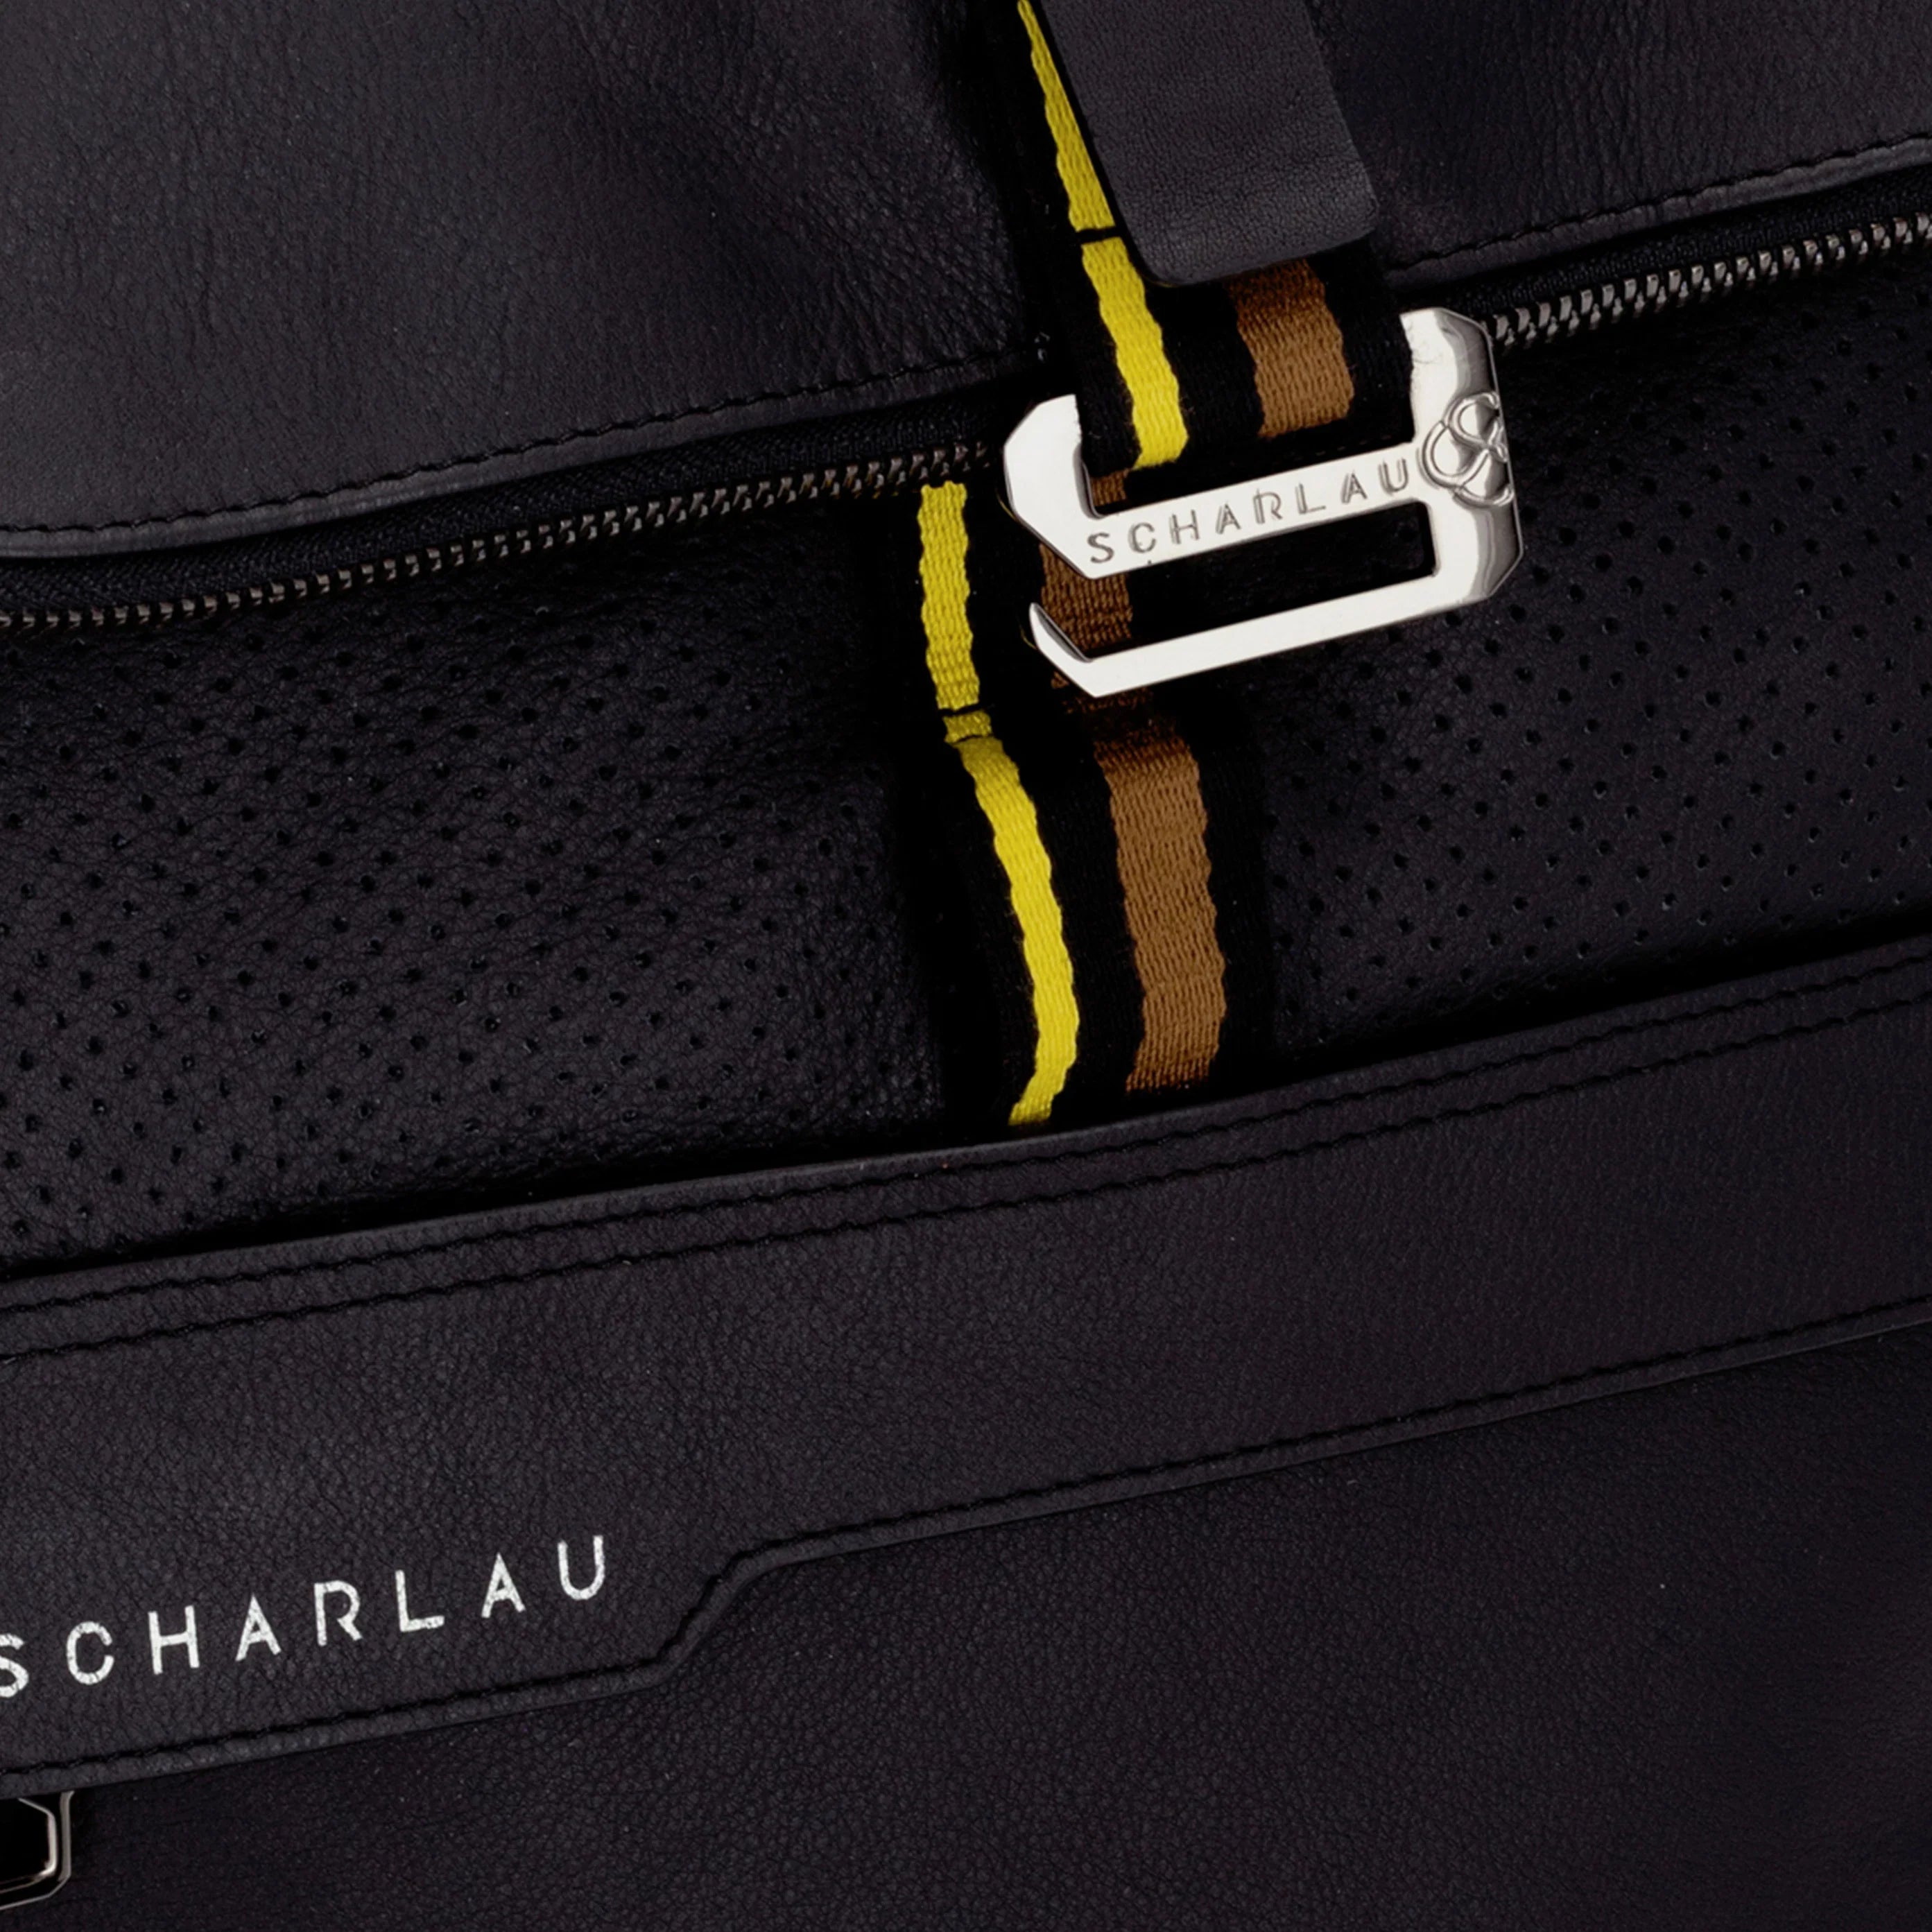 Scharlau Slackline Spelterini Backpack 42 cm - Black